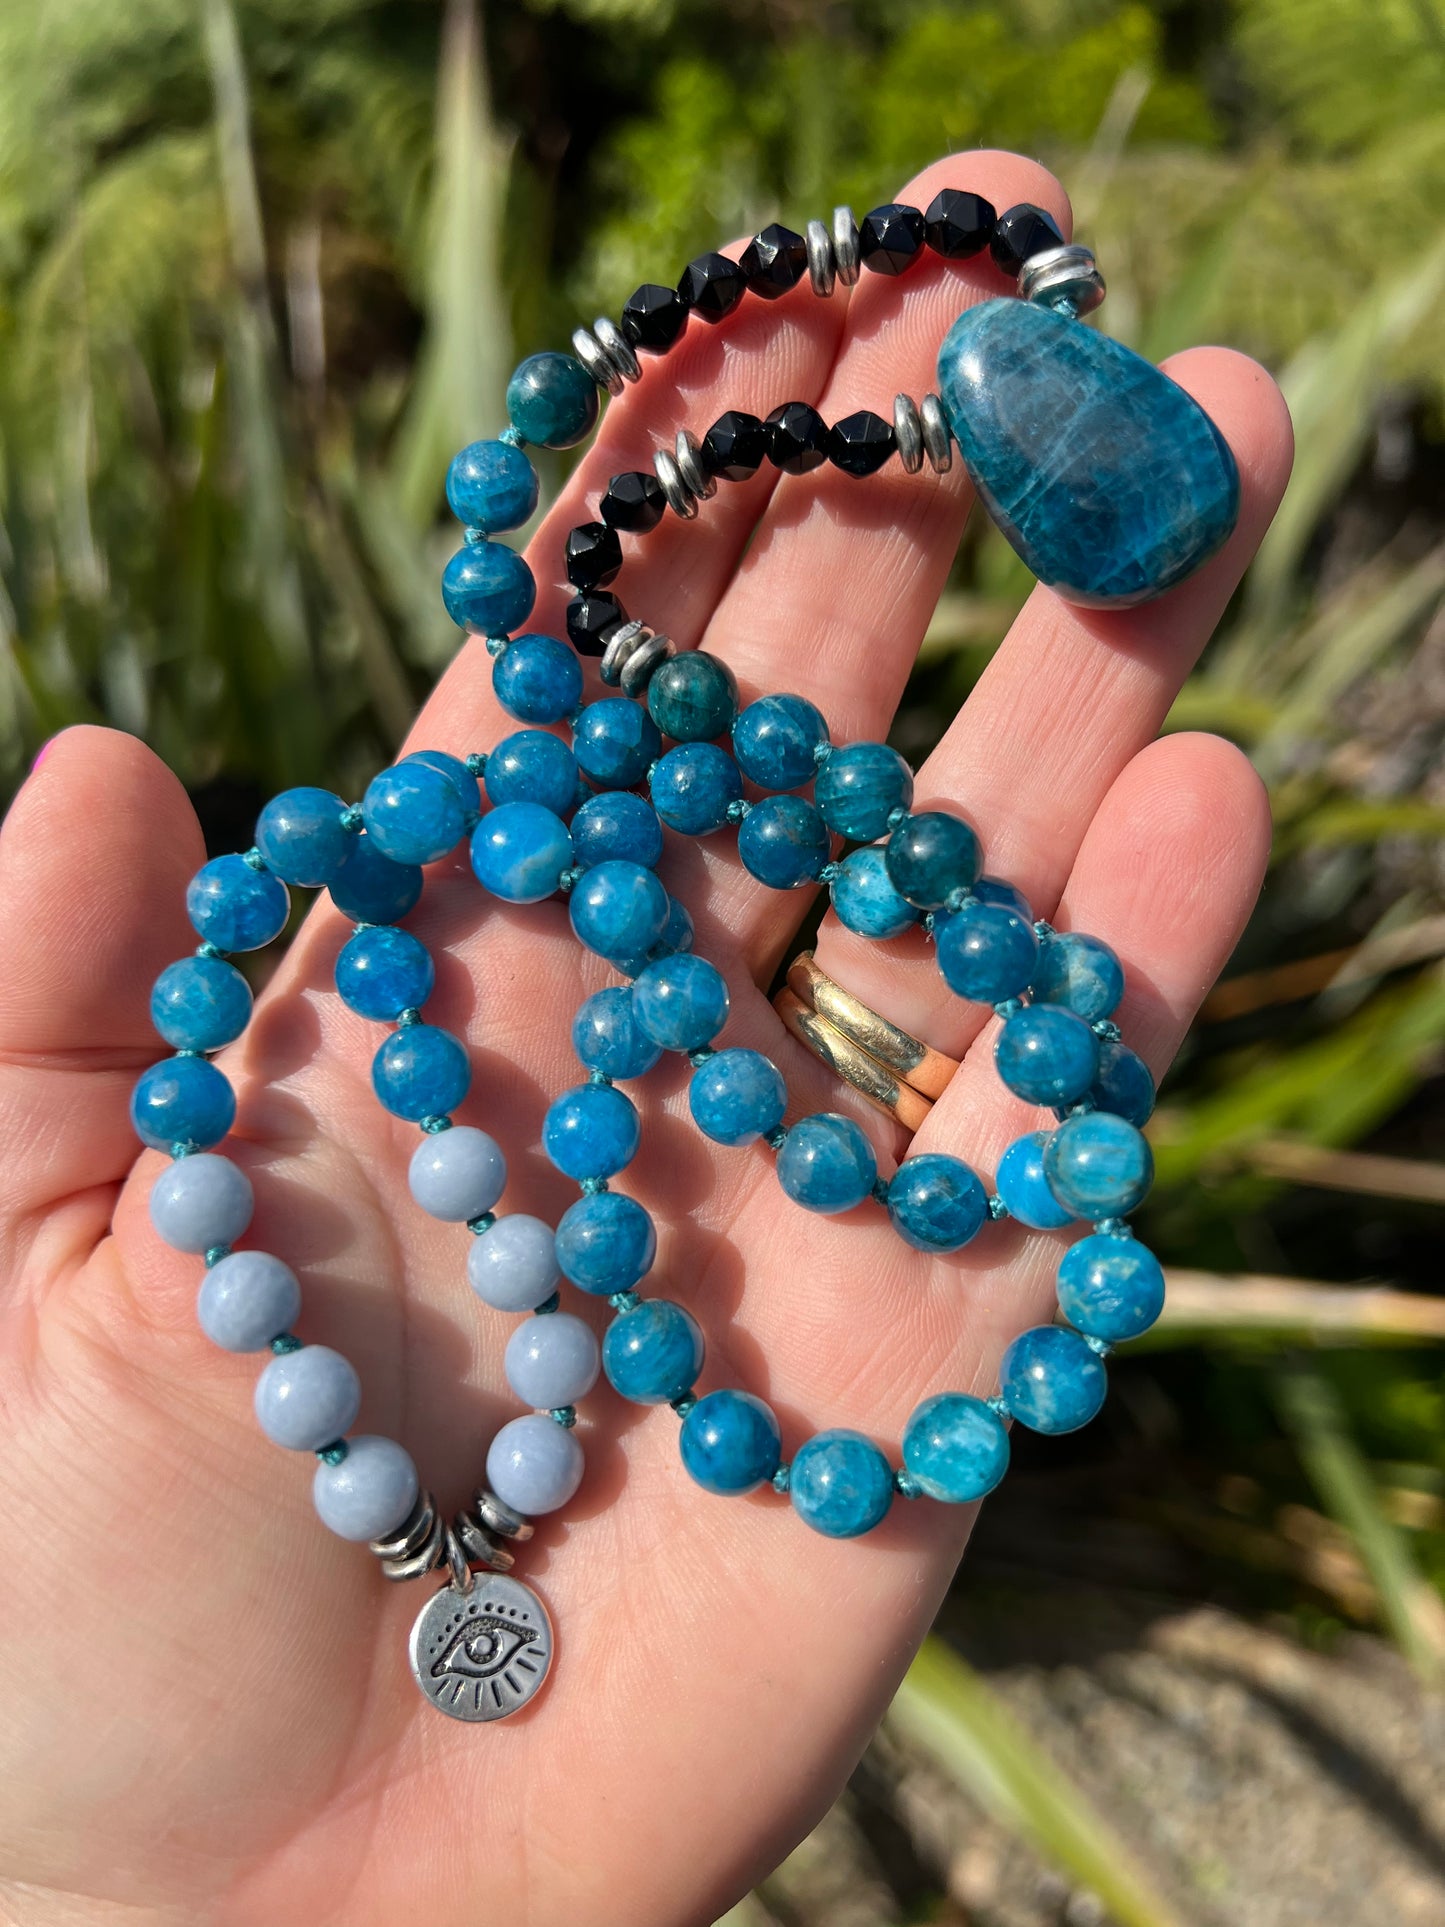 Mālā Half with Apatite, Angelite Beads and a Apatite Guru Bead/Pendant